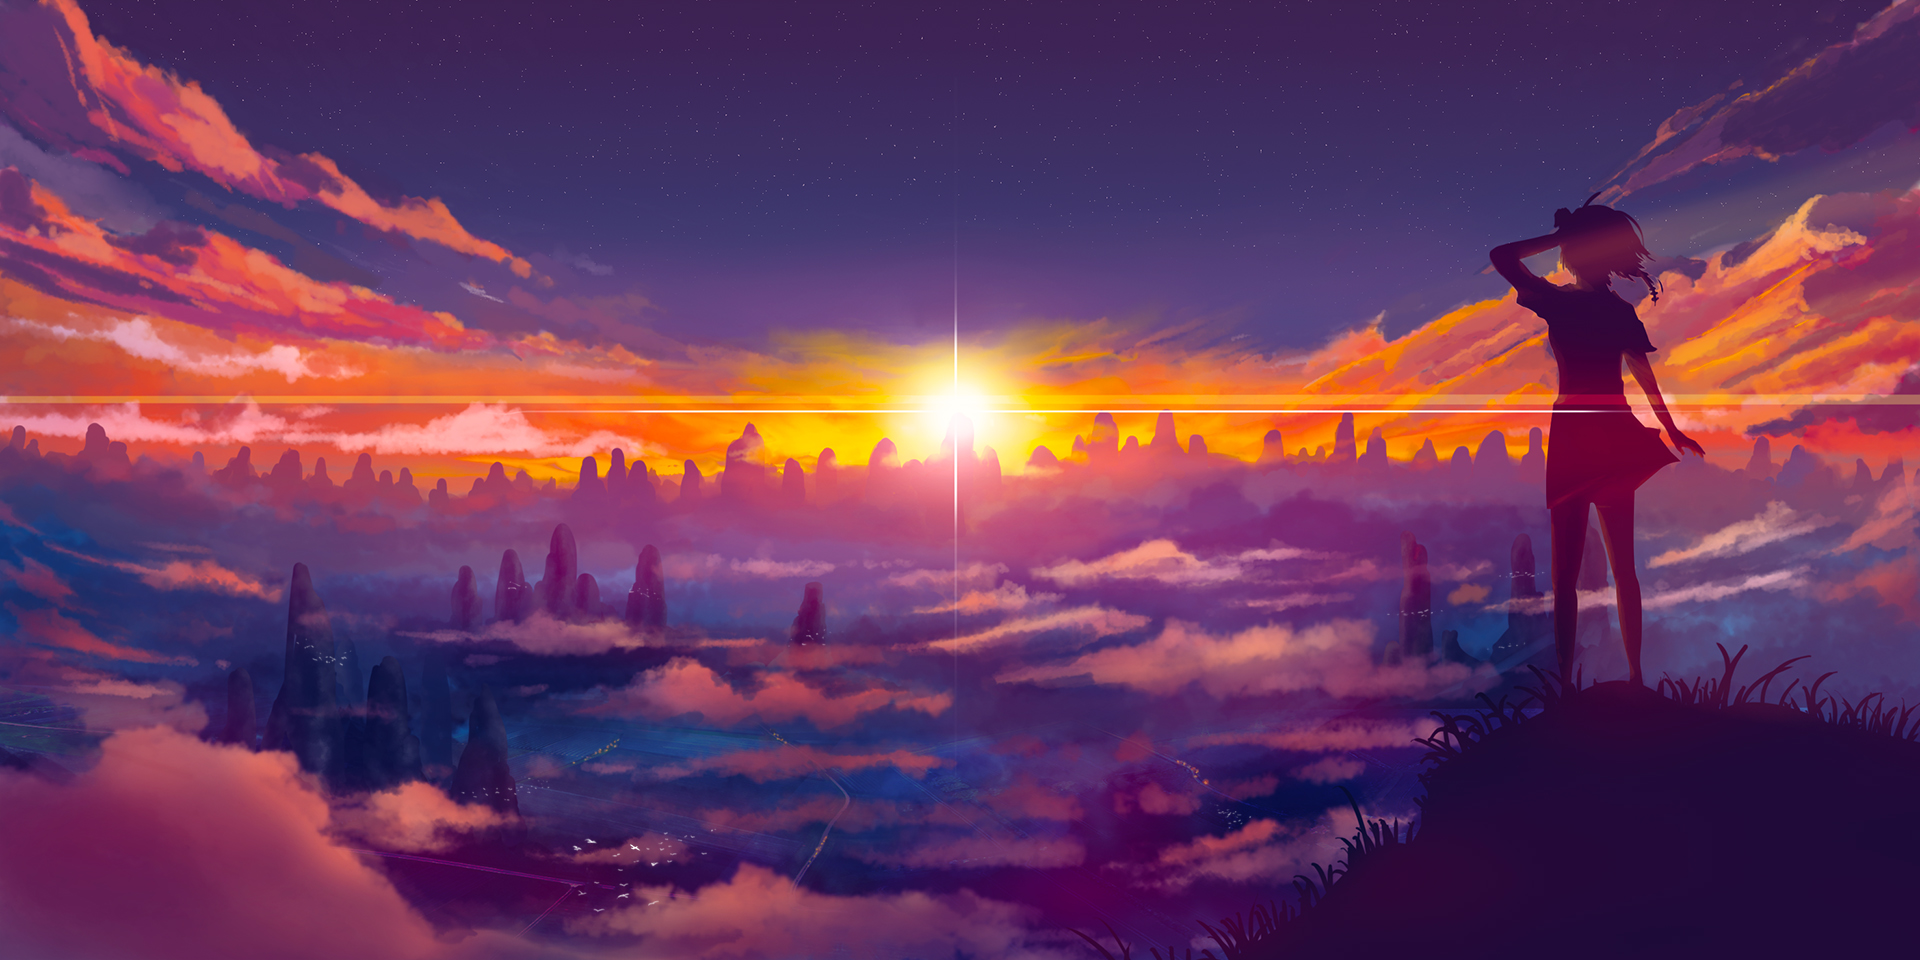 Anime Sunrise Art by jakejk